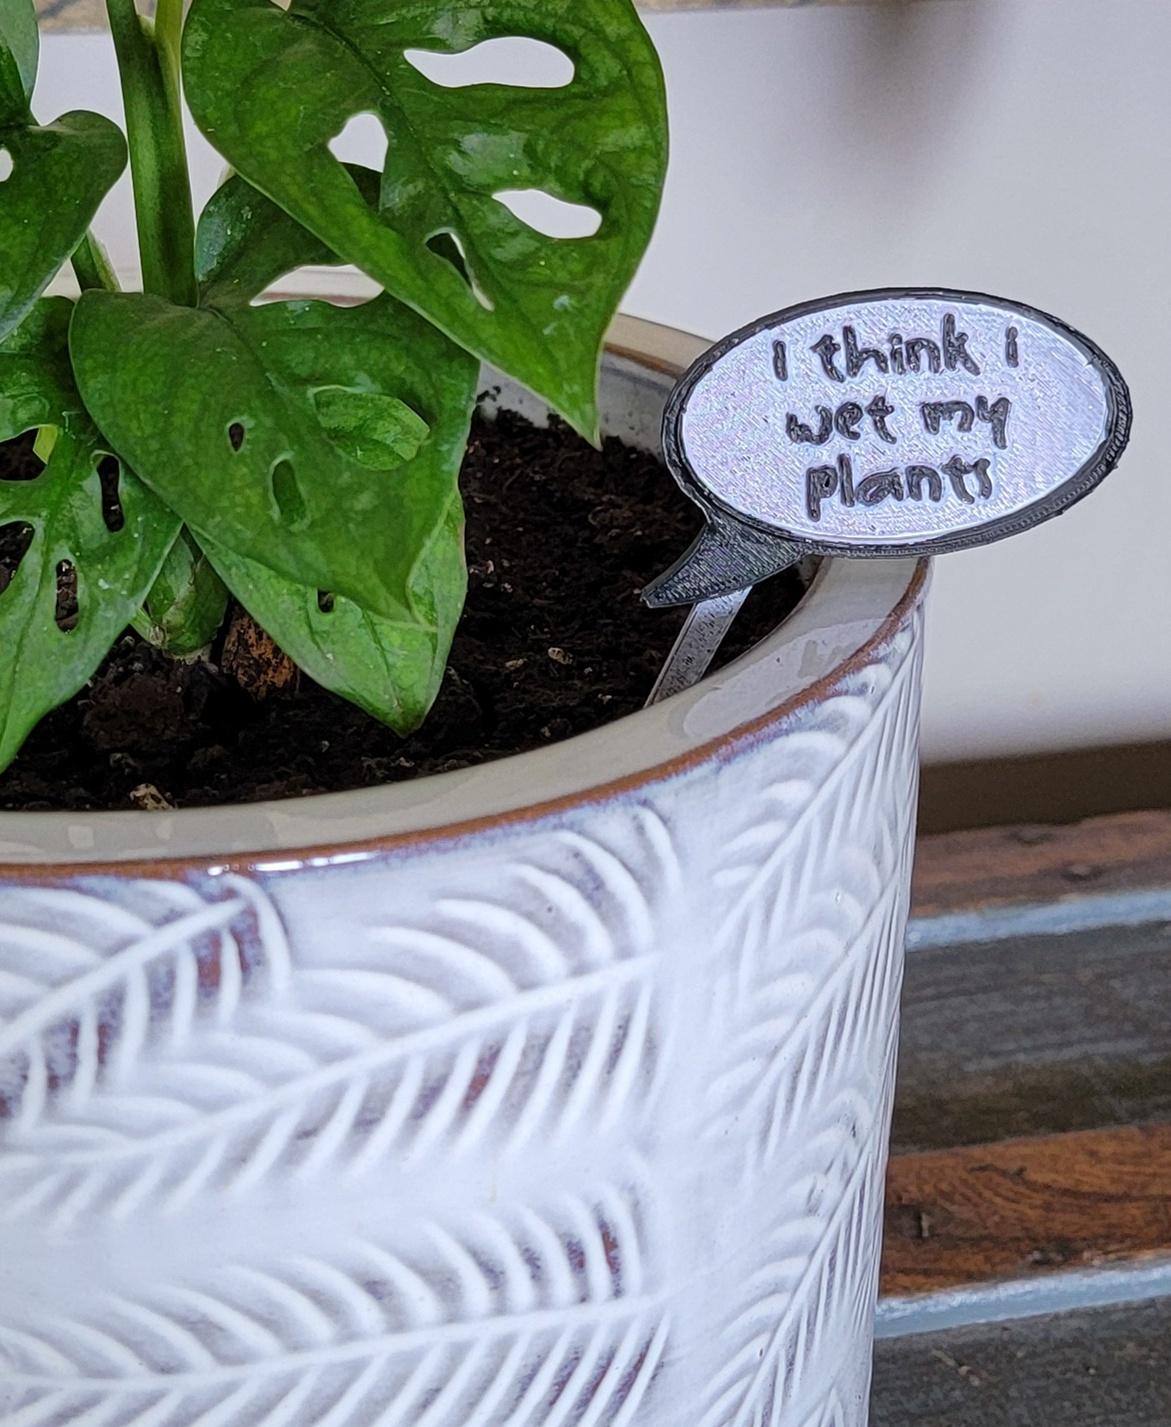 Plant Speech Balloon - I think I wet my plants 3d model